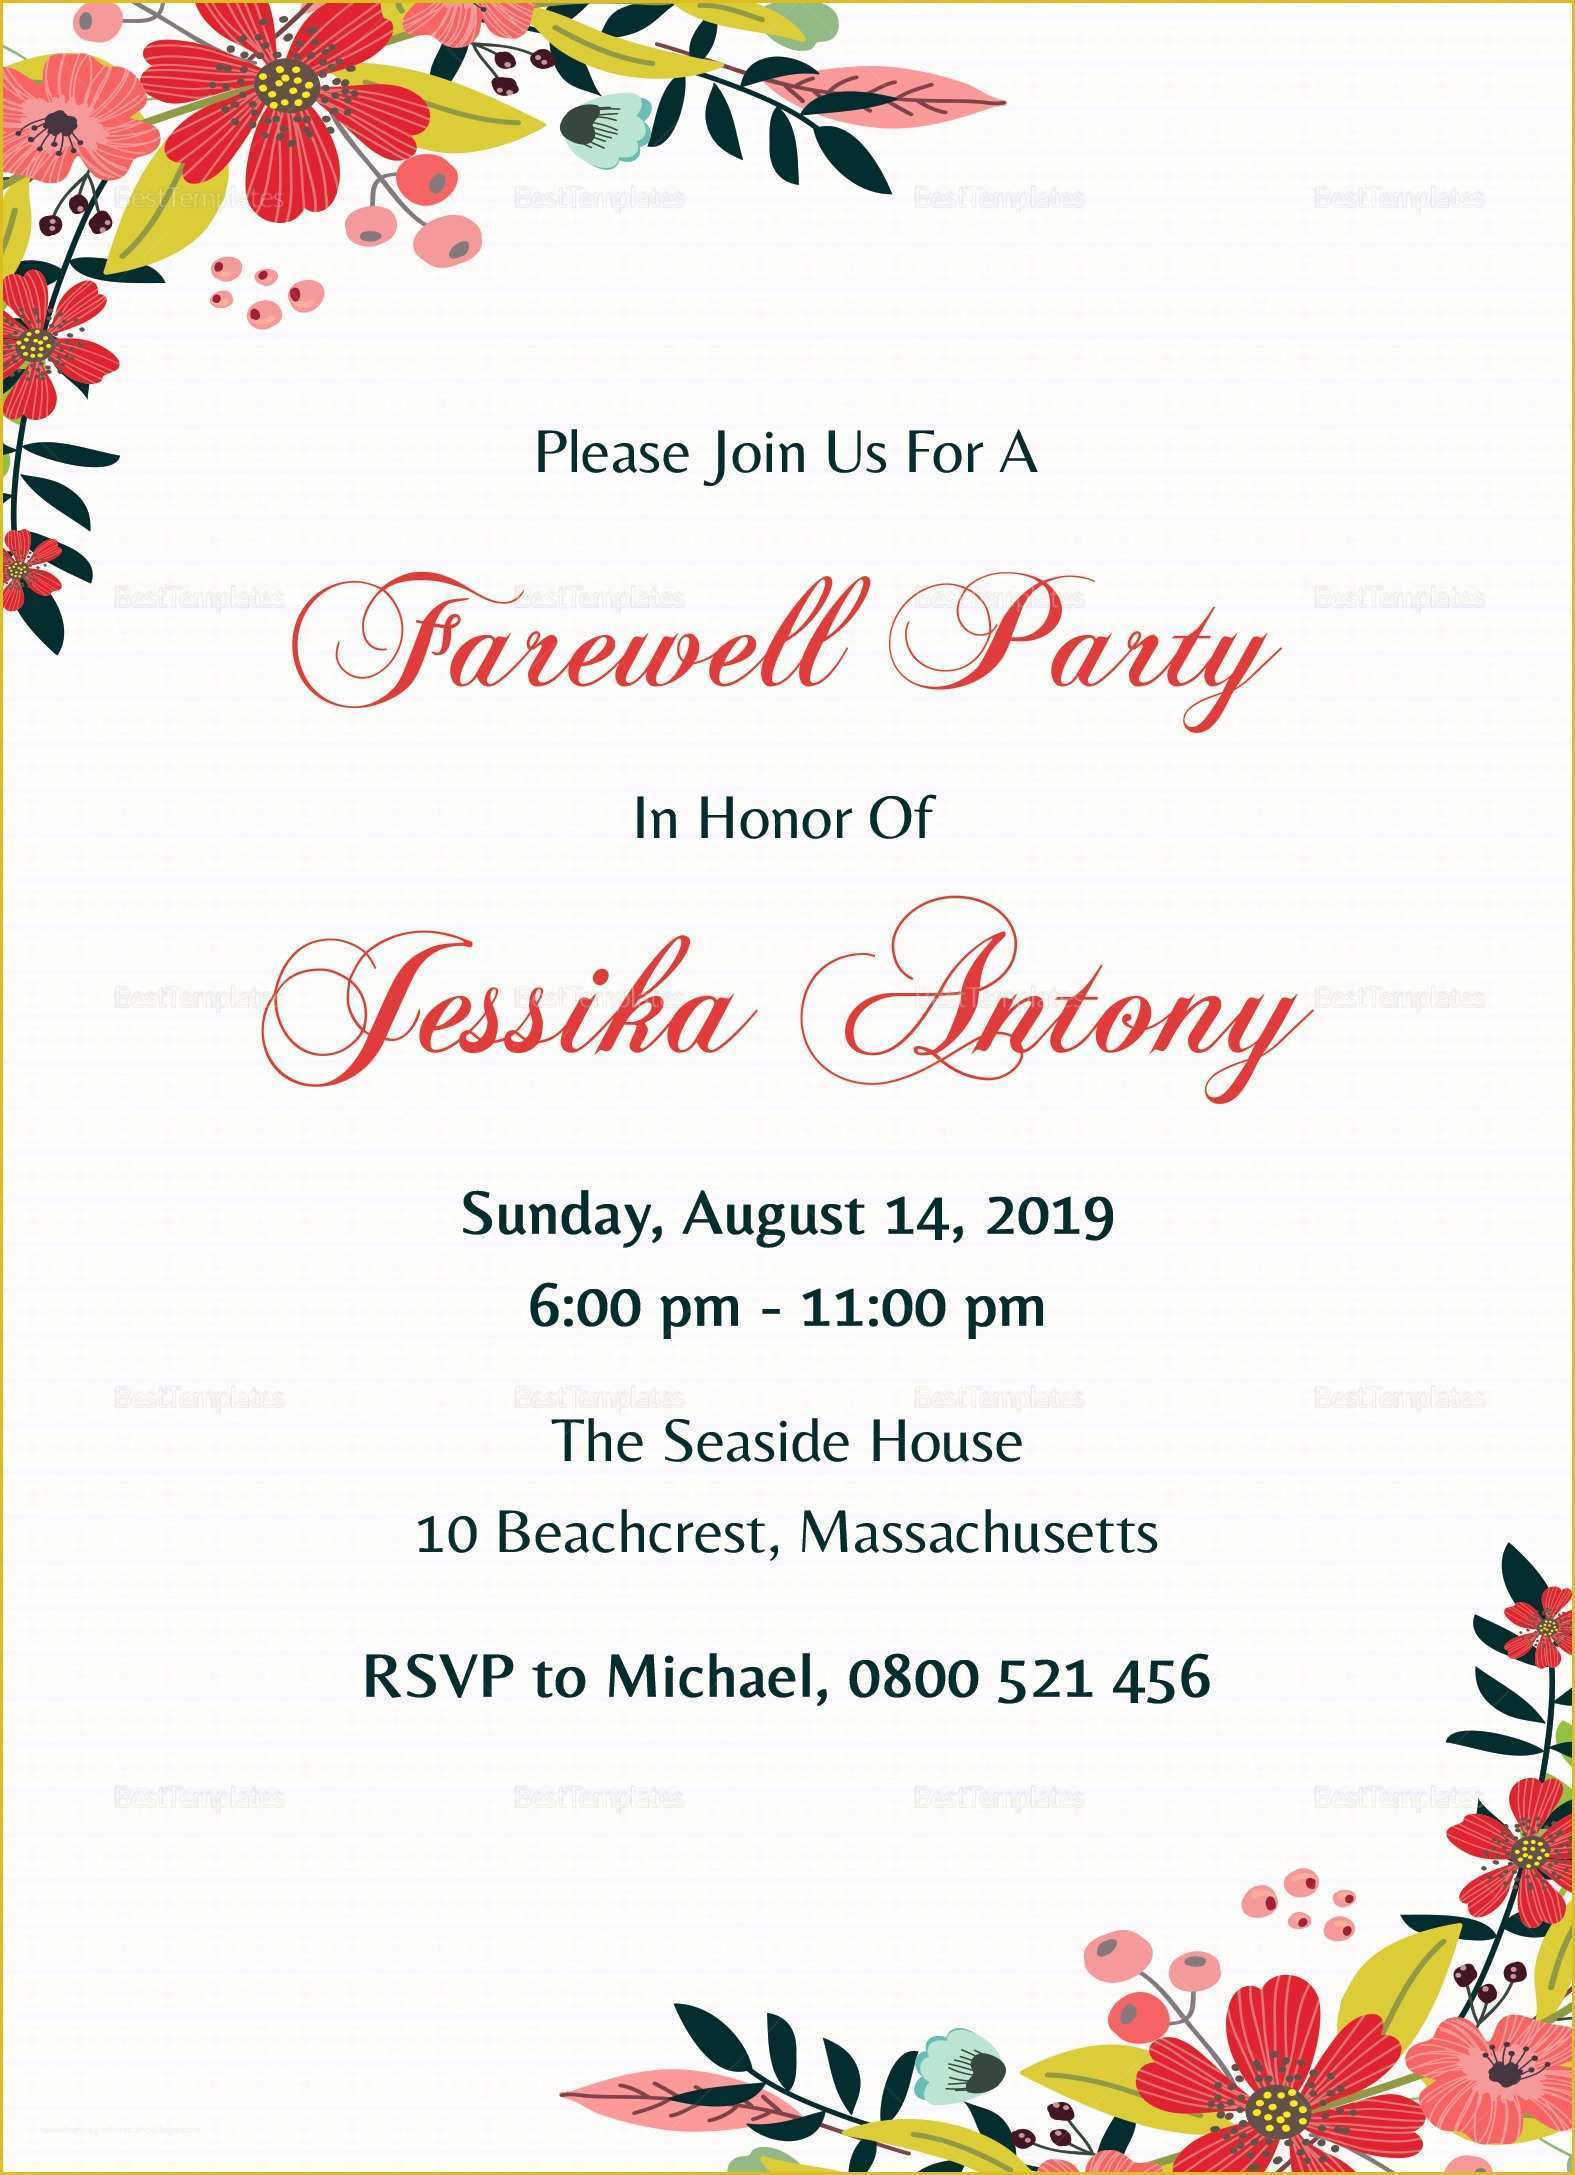 Free Farewell Invitation Templates Of Classic Farewell Party Invitation Design Template In Word